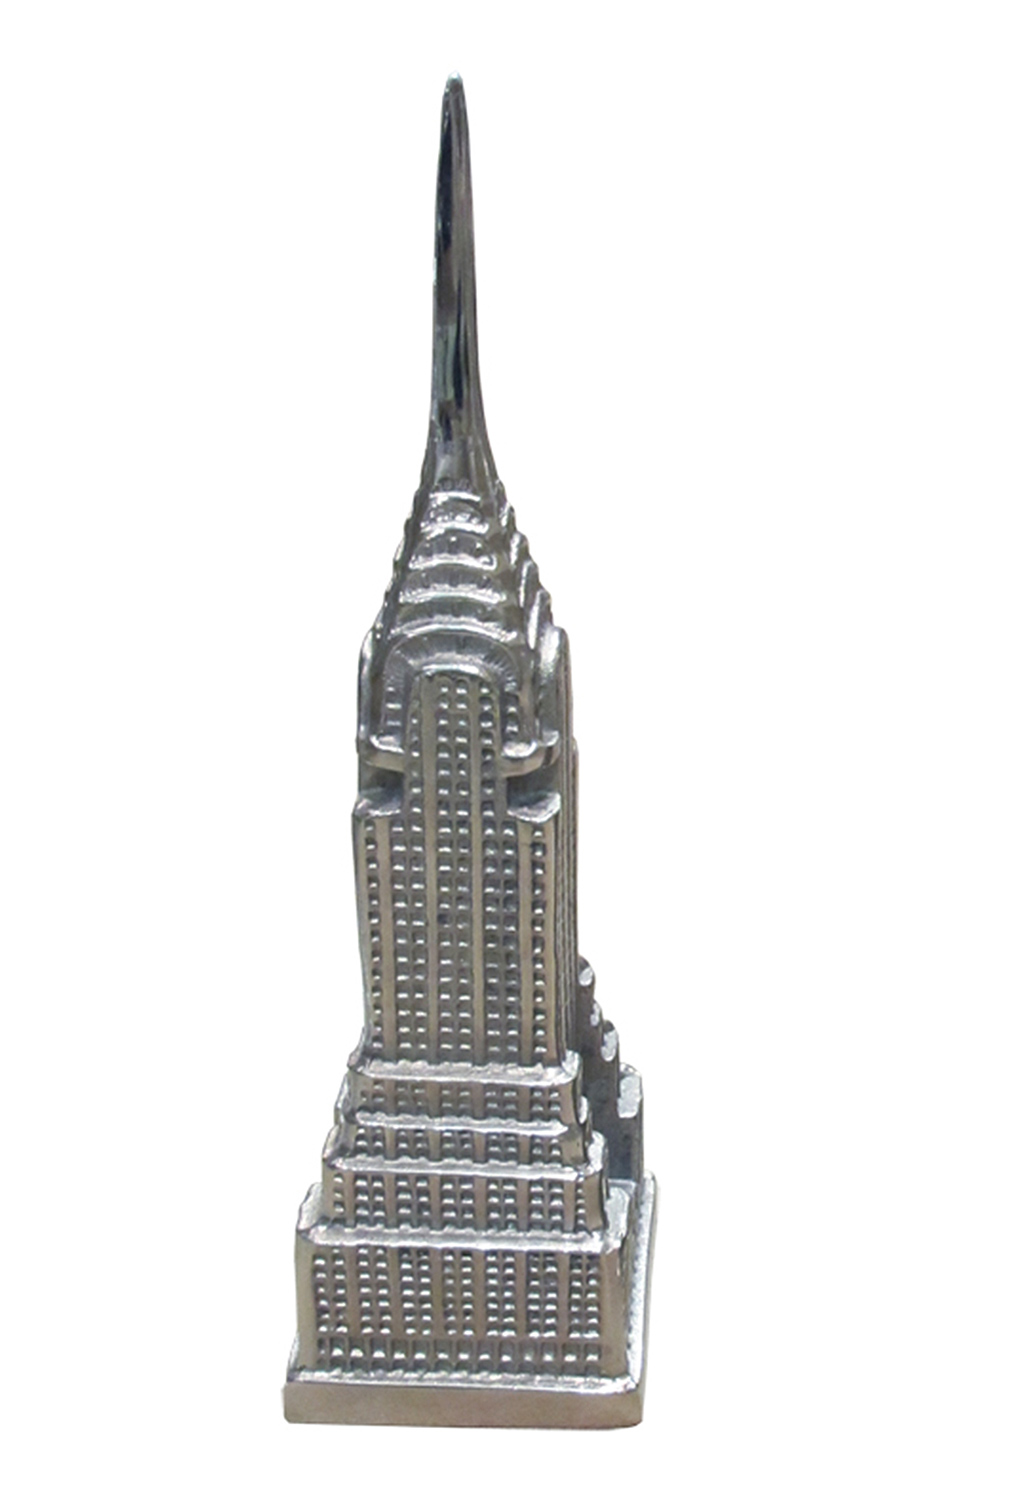 Ren-Wil Chrysler Building Statue - Satin nickel